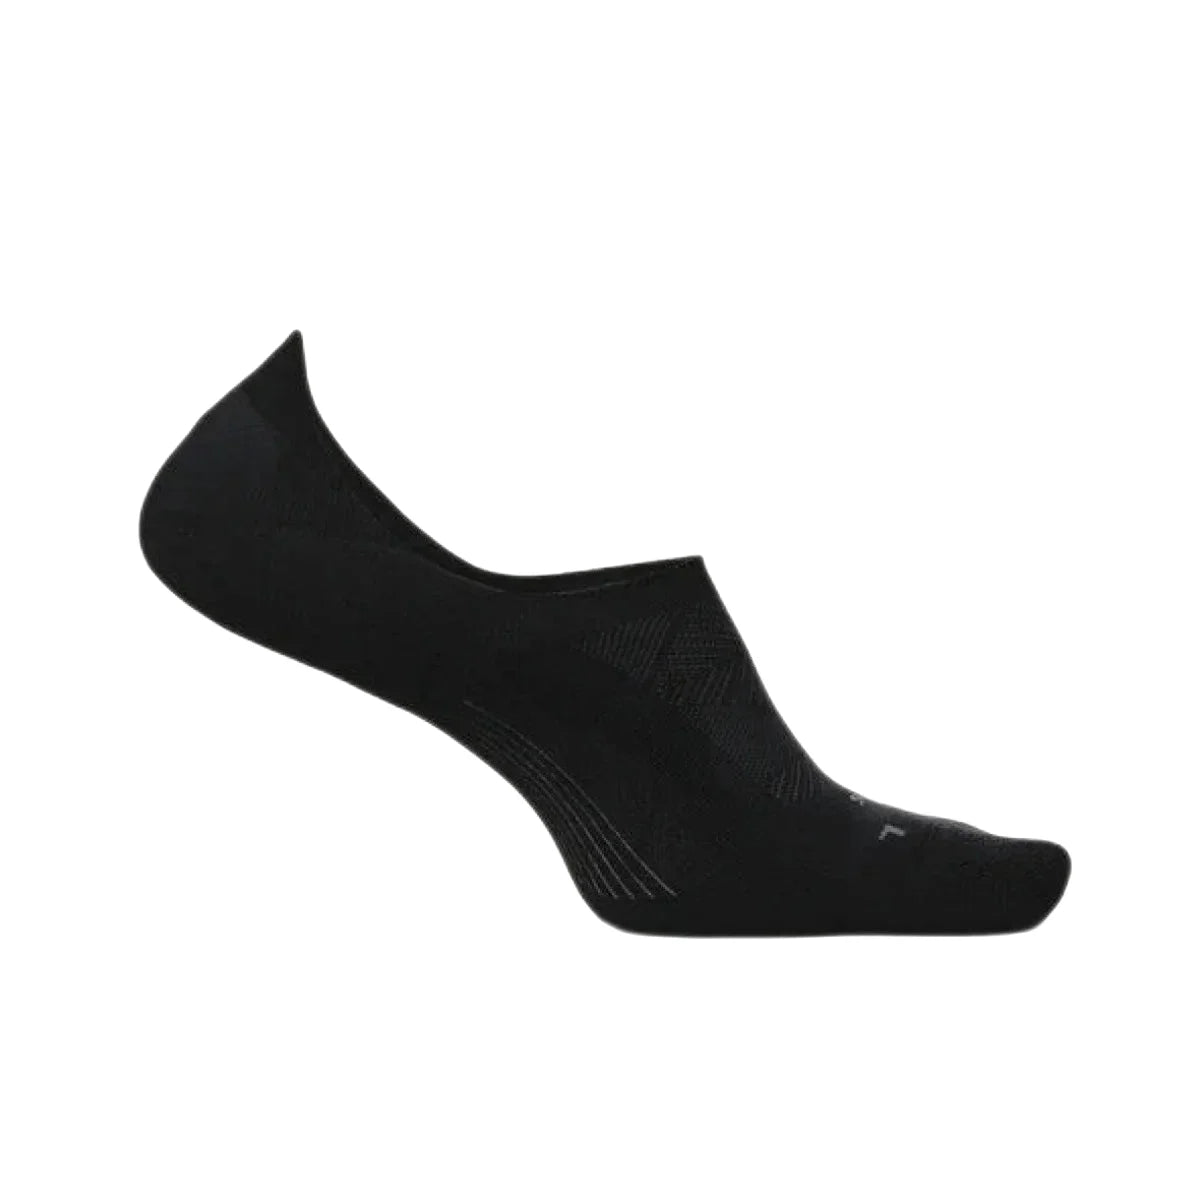 Unisex Feetures Elite Light Cushion Invisible Socks